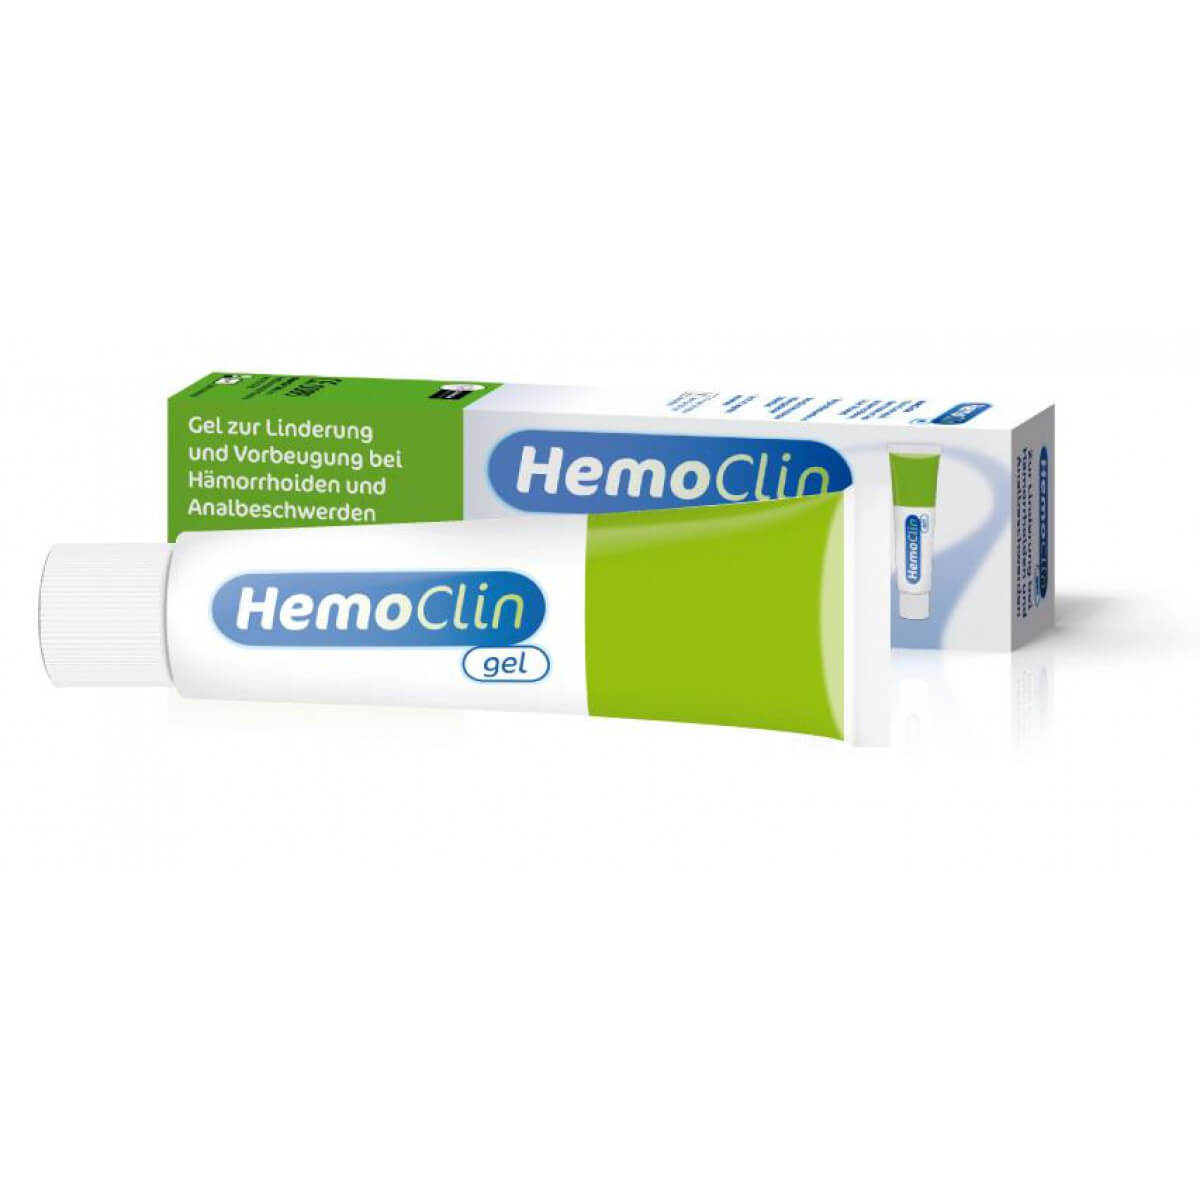 Image of HemoClin Gel (27g)